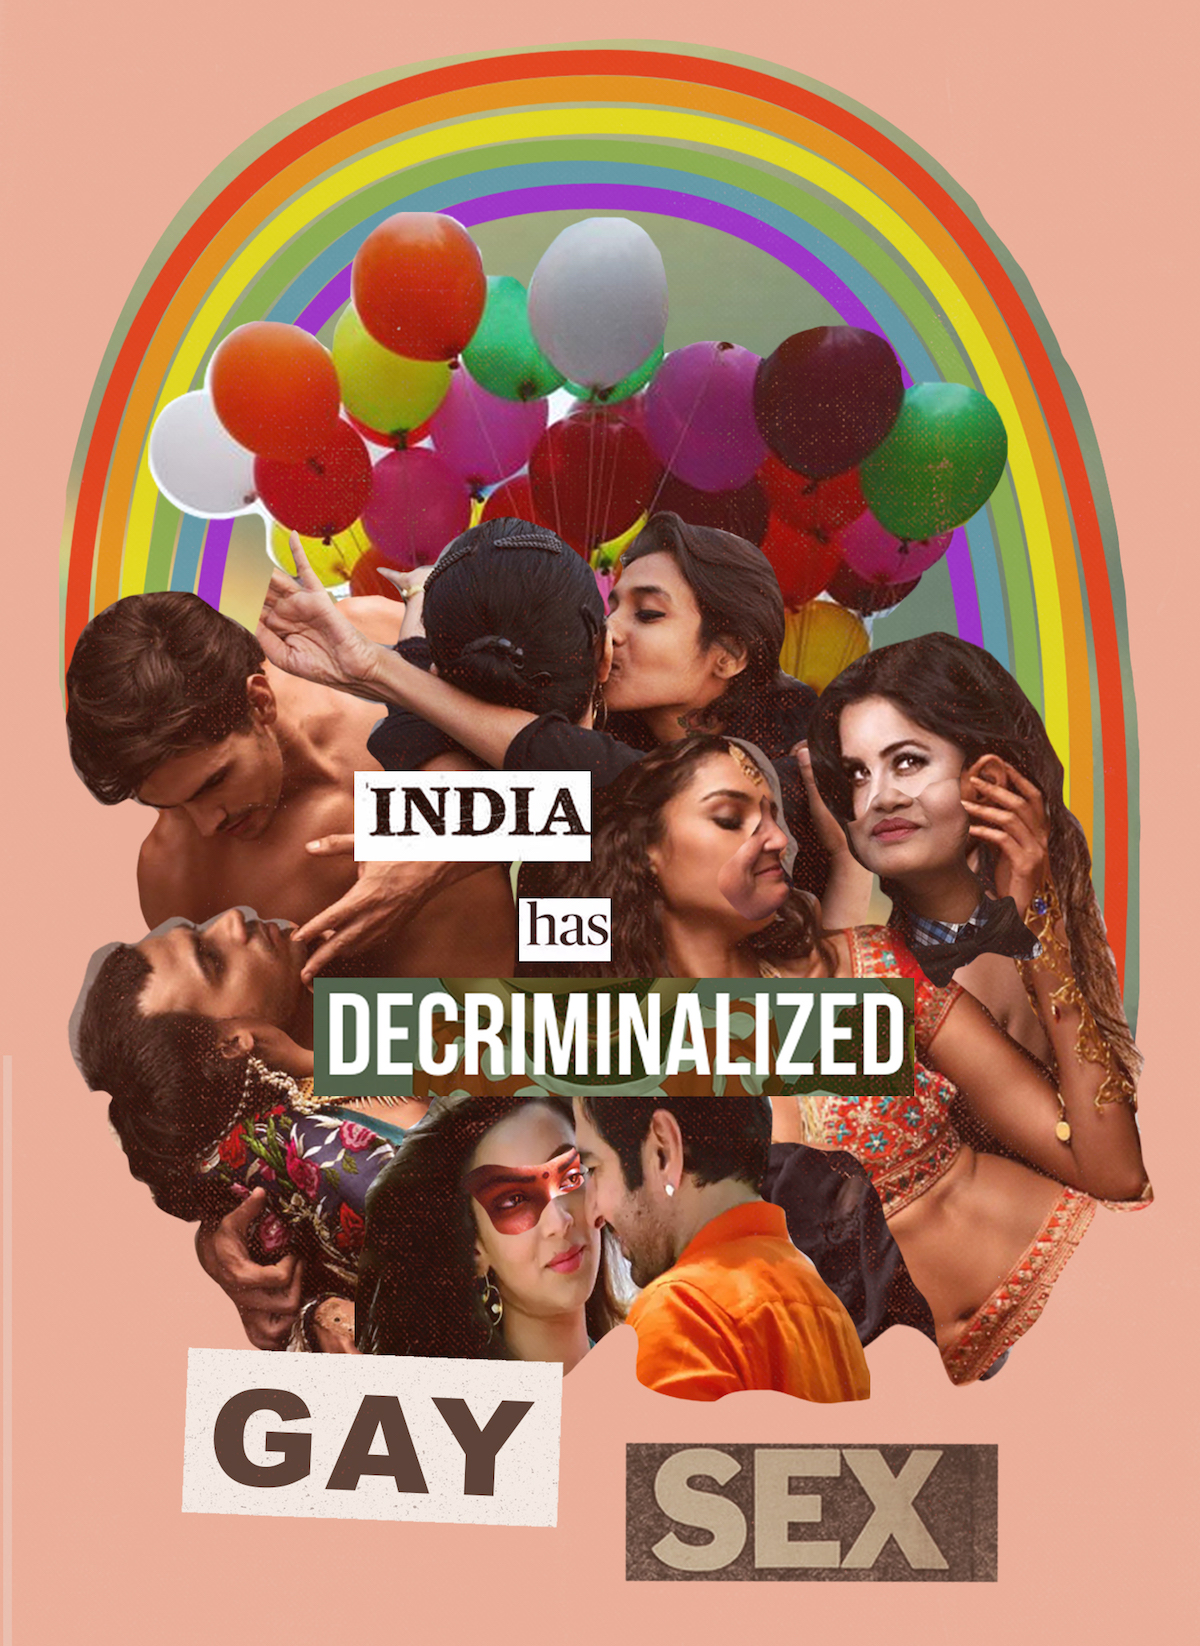 YEOJA Mag - Gay Rights - India has decriminalized gay sex - Written by Sarah Kearns, Artwork by Katia Engell